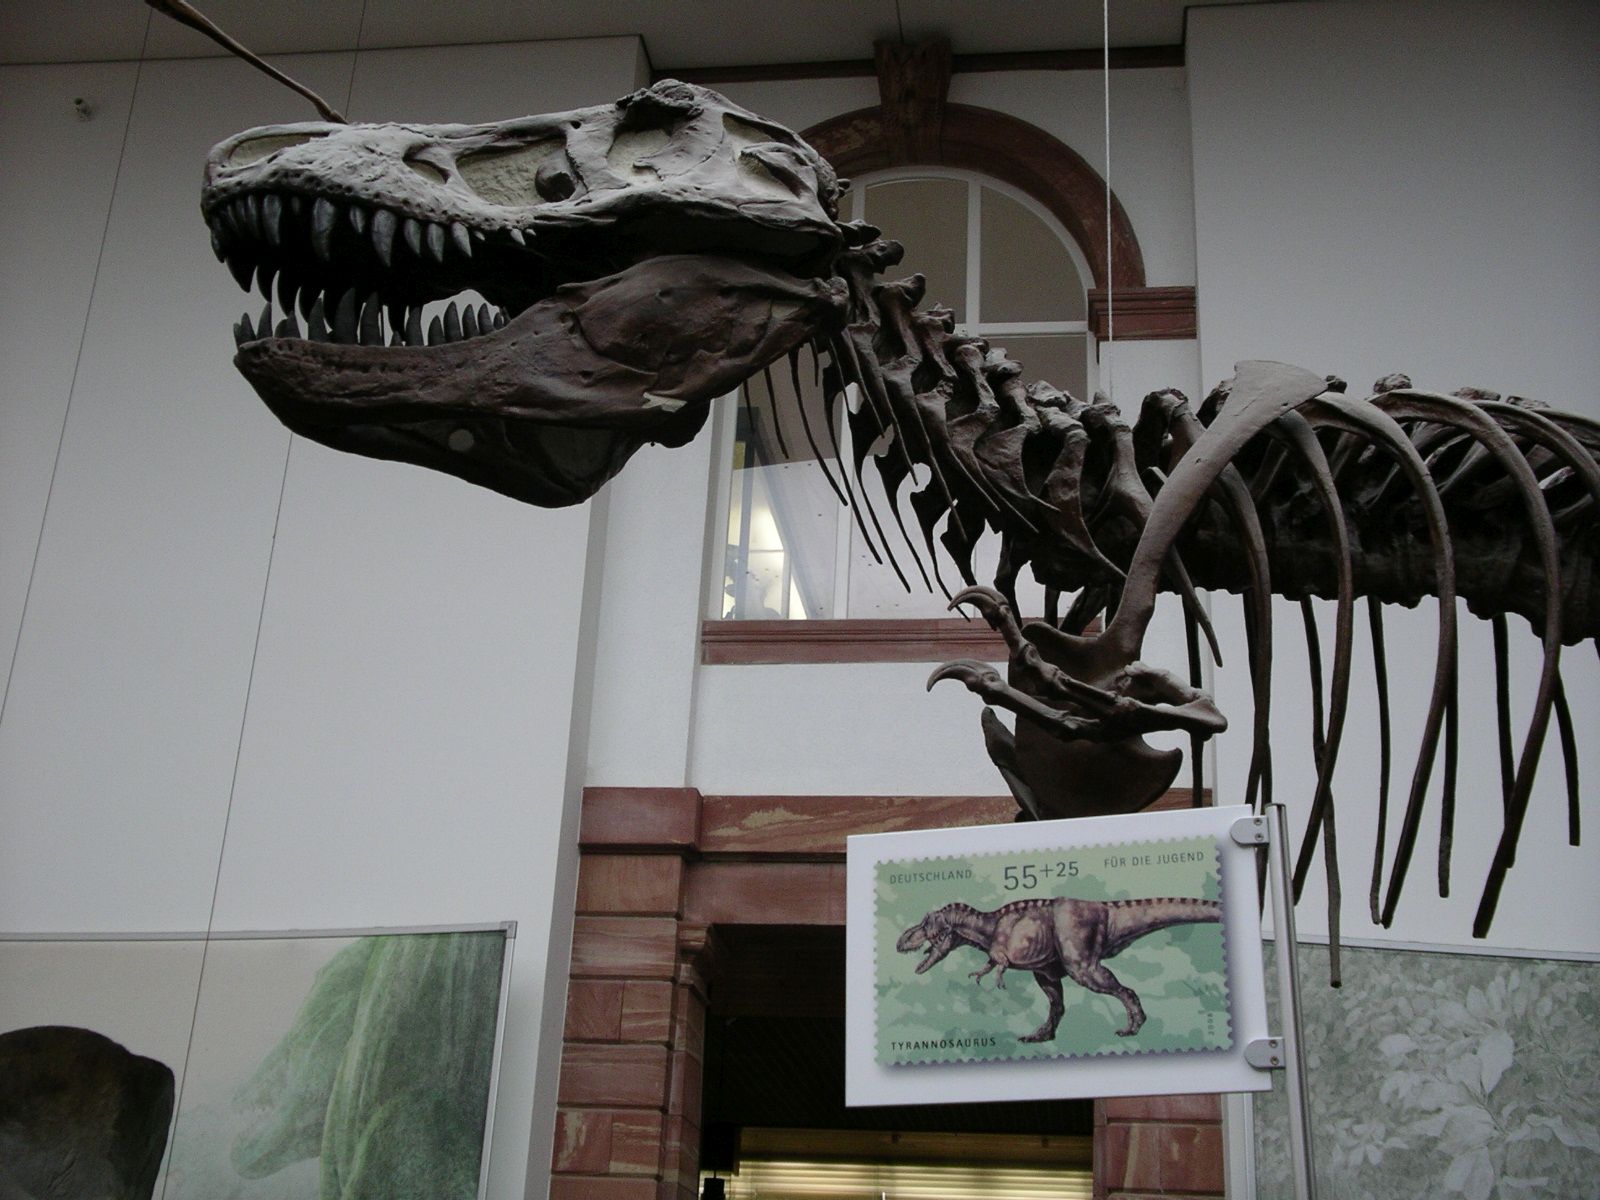 Enlarged images of Tyrannosaurus rex stamp, next to its skeleton